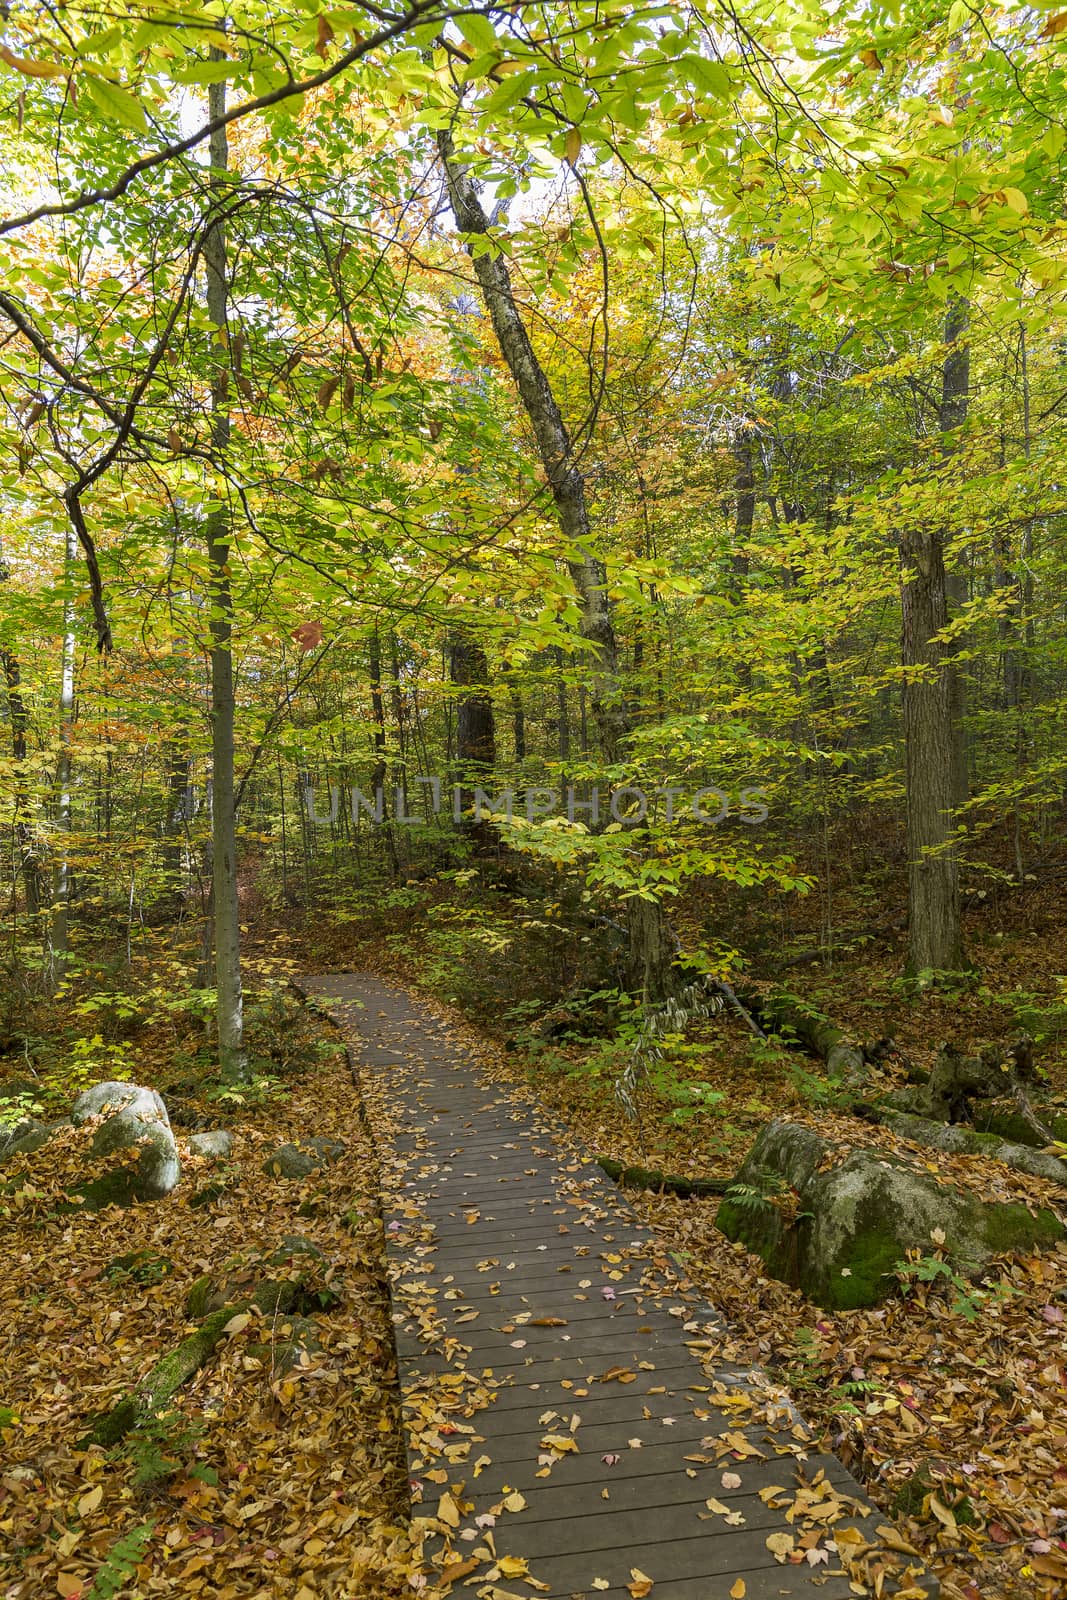 Boardwalk in a Fall Forest - Ontario, Canada by gonepaddling